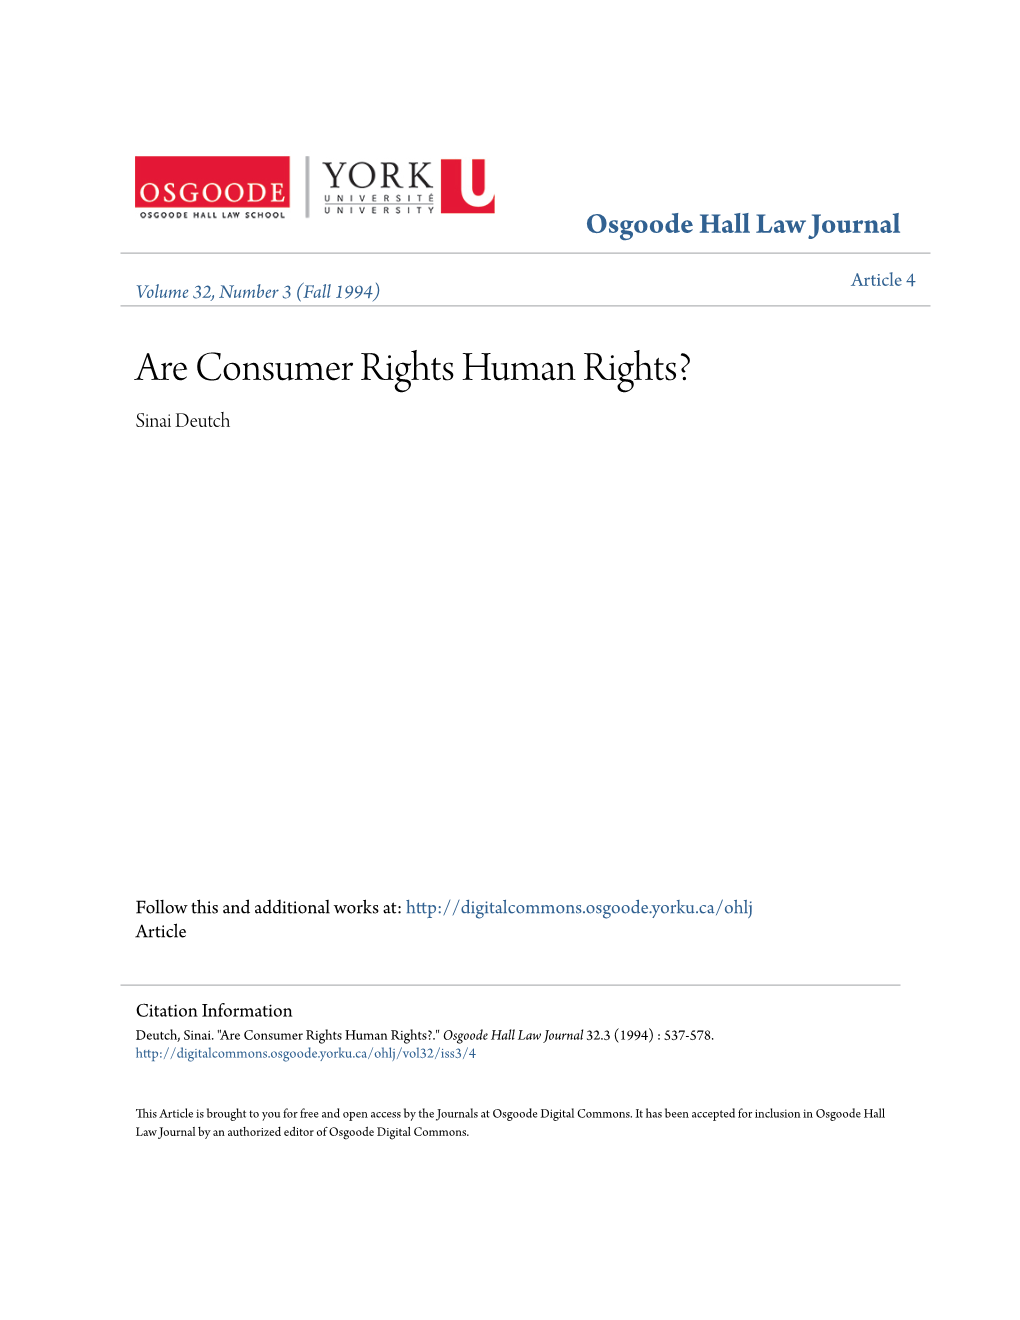 Are Consumer Rights Human Rights? Sinai Deutch